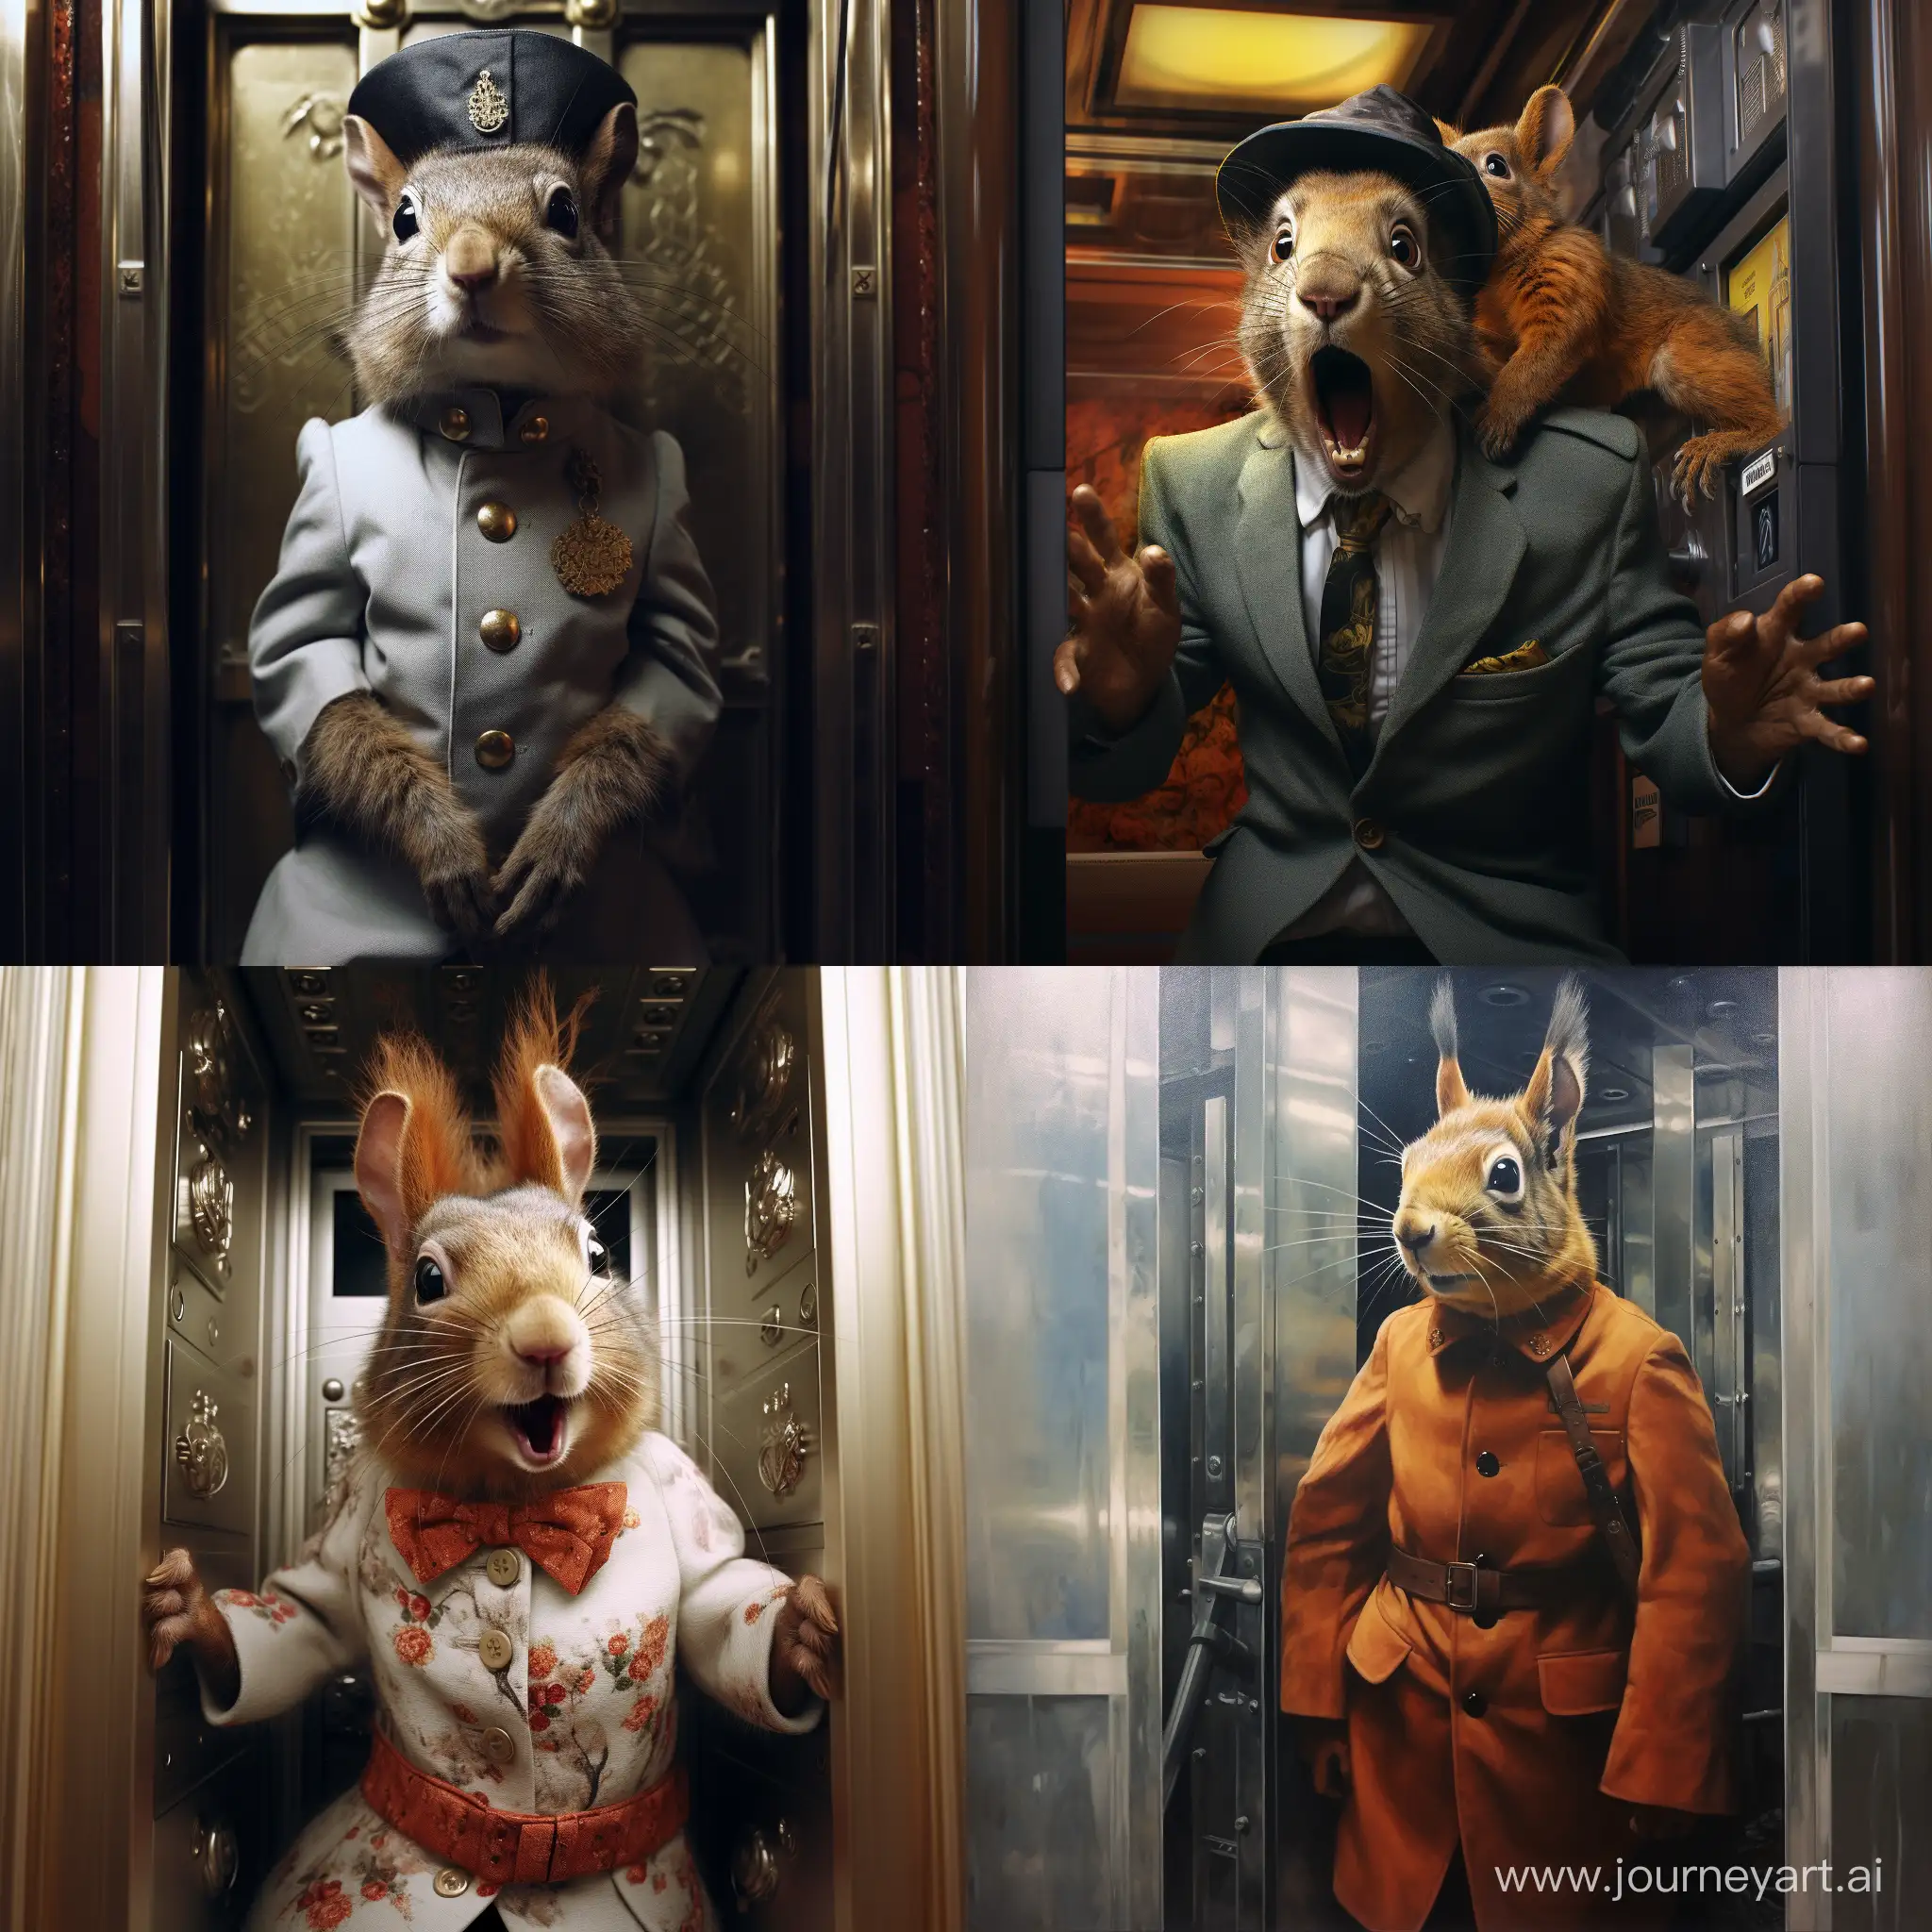 Inebriated-Elevator-Attendant-Envisions-Playful-Squirrel-Artistic-Representation